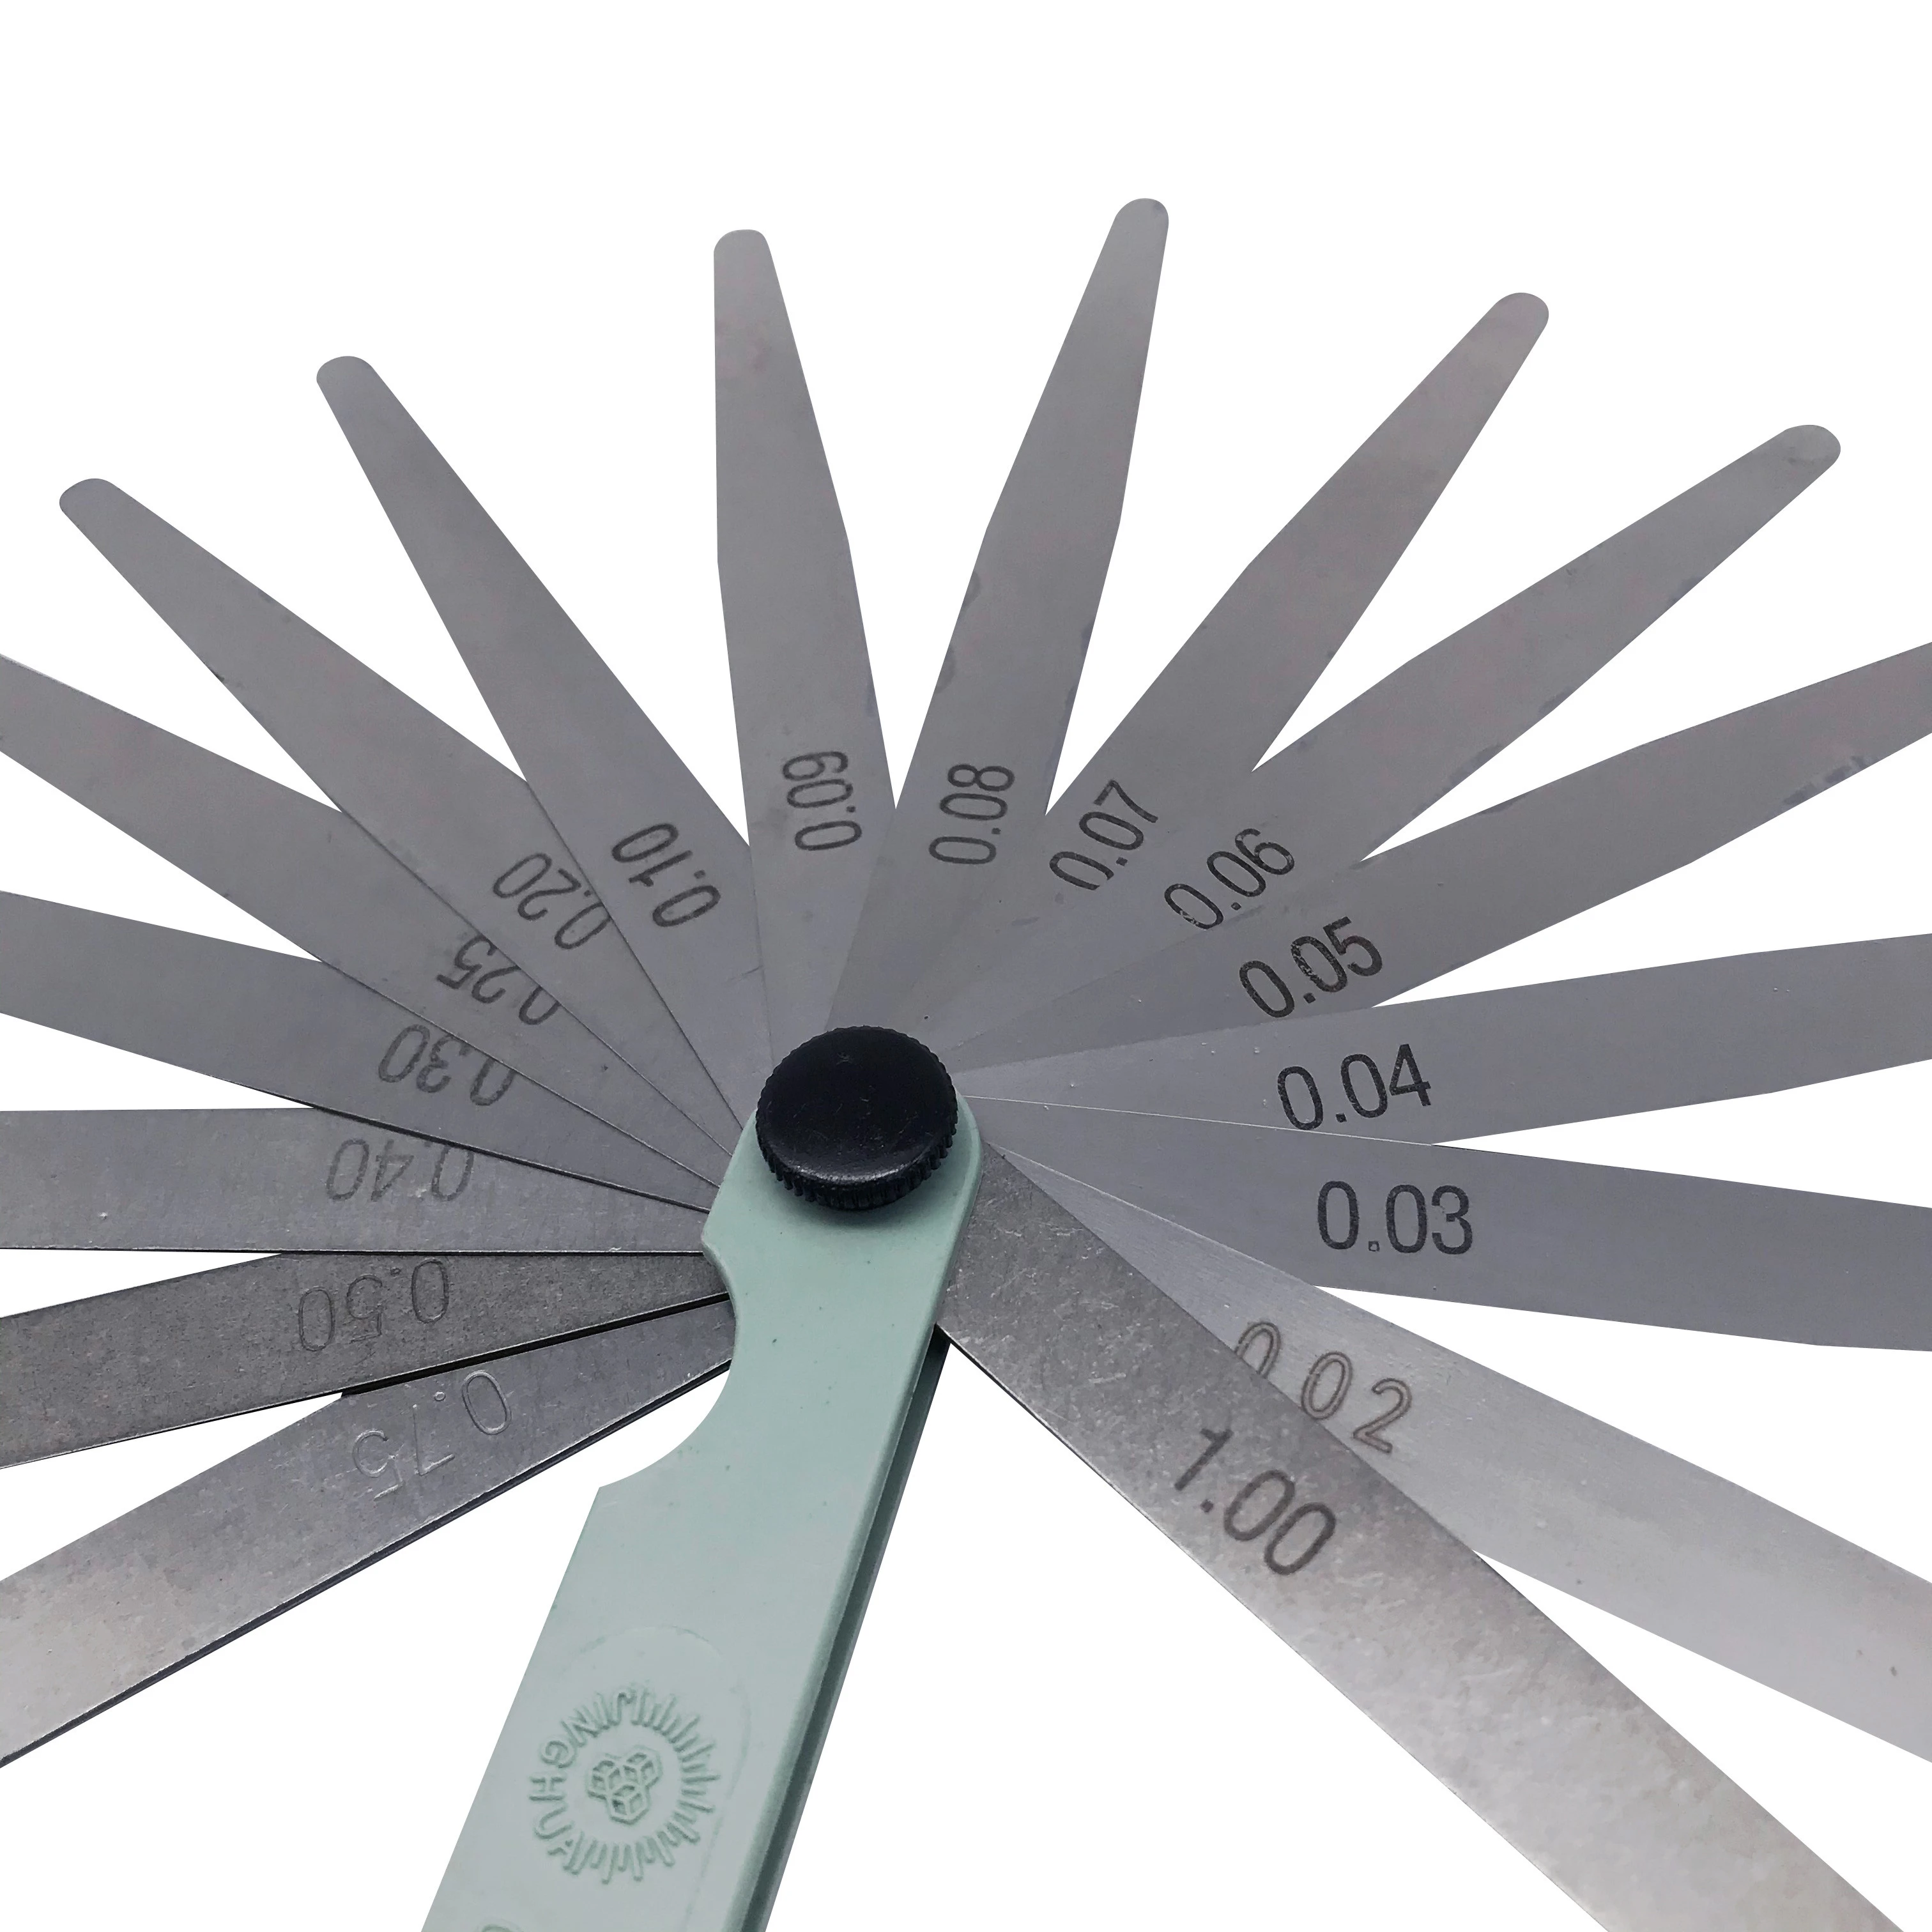 17 Blades Spark Plug Thickness Gap Metric Filler Feeler Gauge Metric Measurement 0.02 to 1mm Steel Measuring Tools 100mm